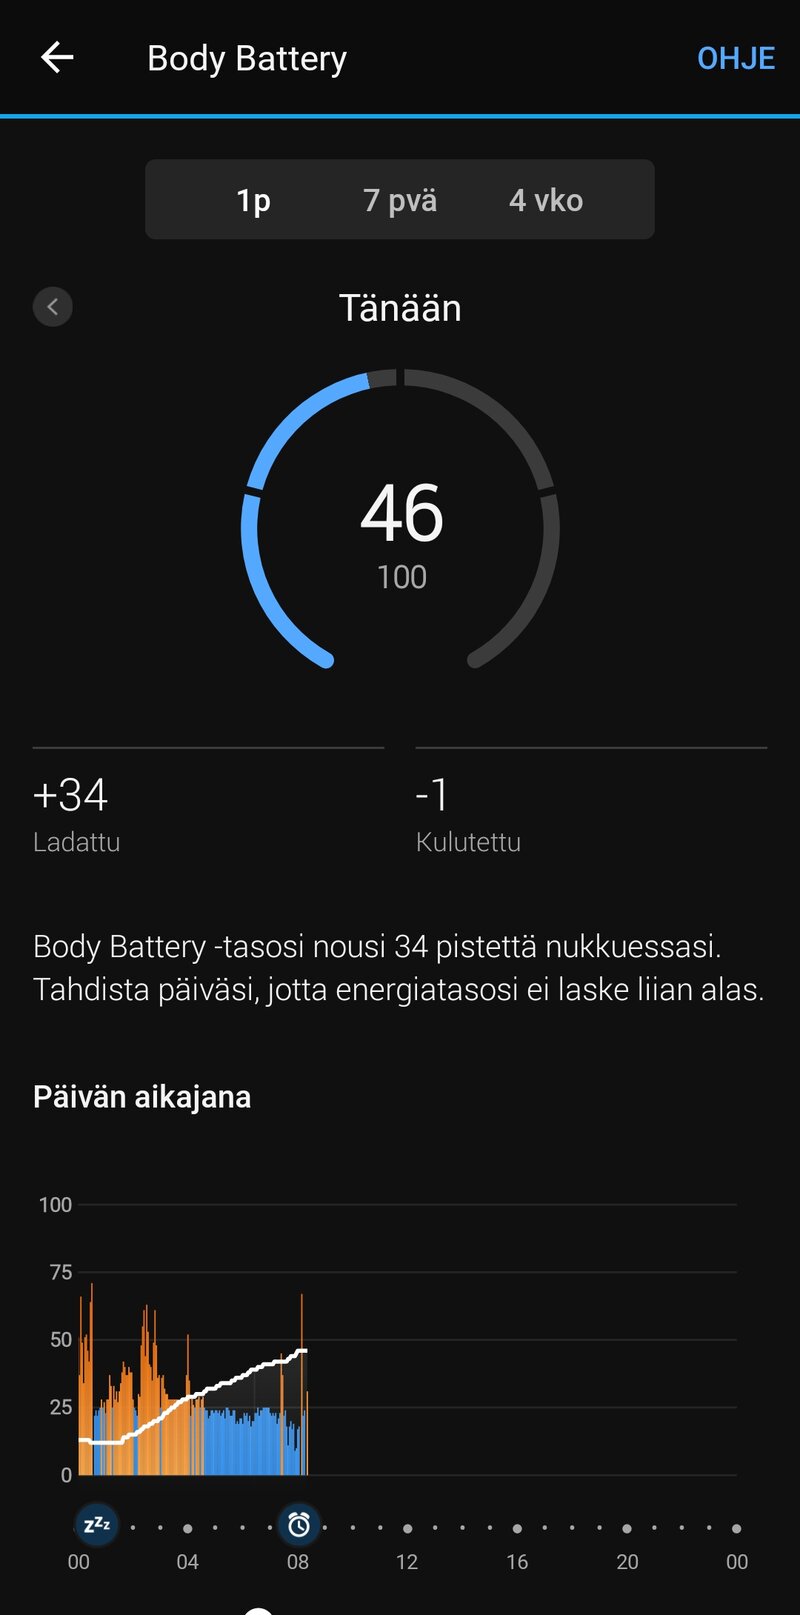 Garmin Body Battery -näkymä